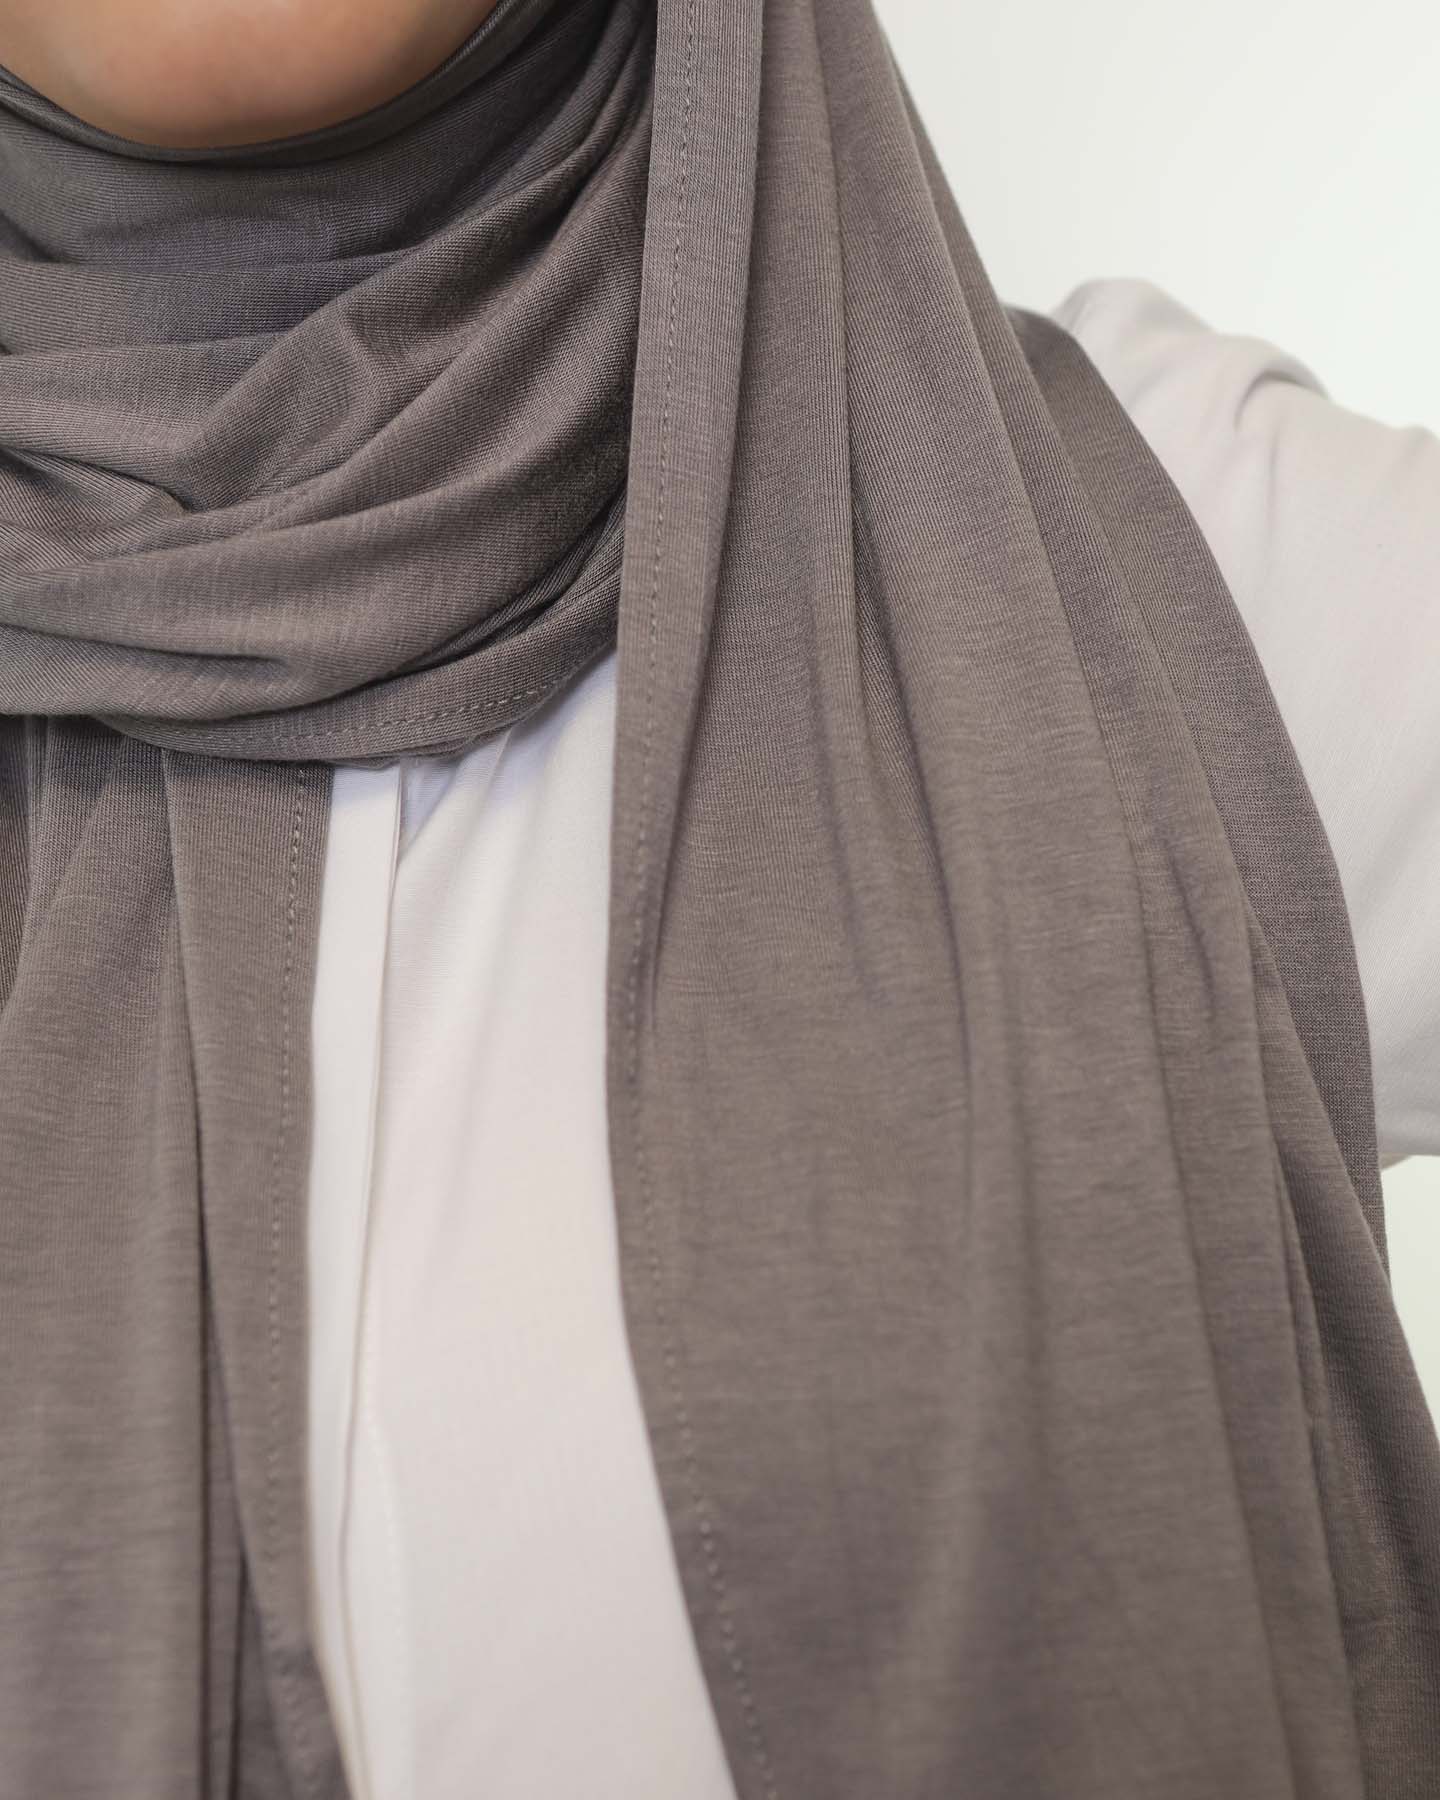 Premium Jersey Hijab - Gray